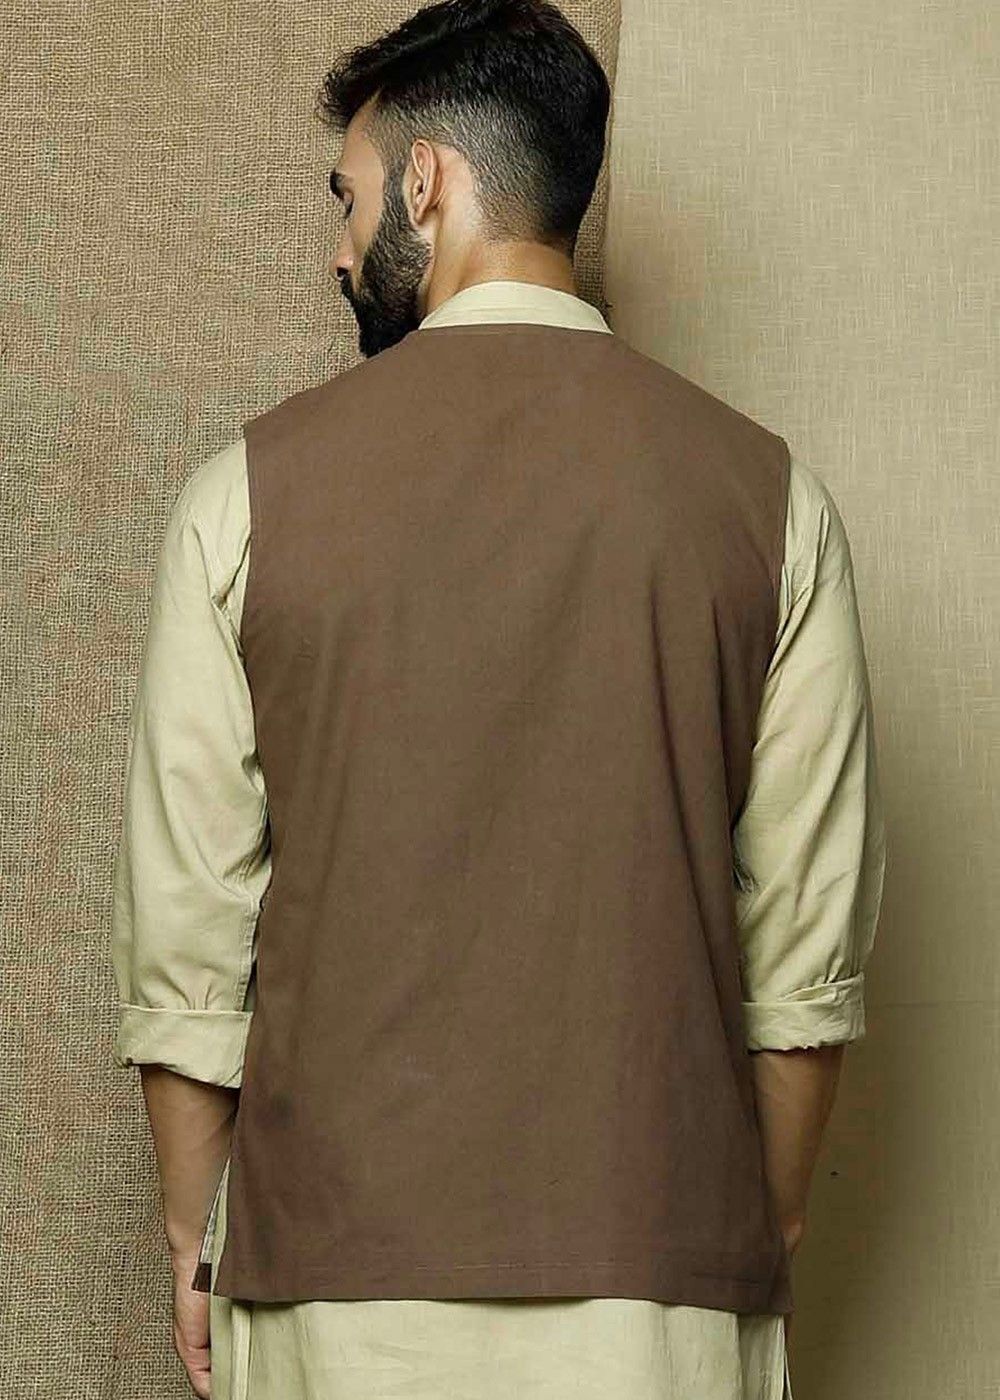 Buy Allen Solly Bandhgala & Nehru jackets online - 13 products | FASHIOLA.in